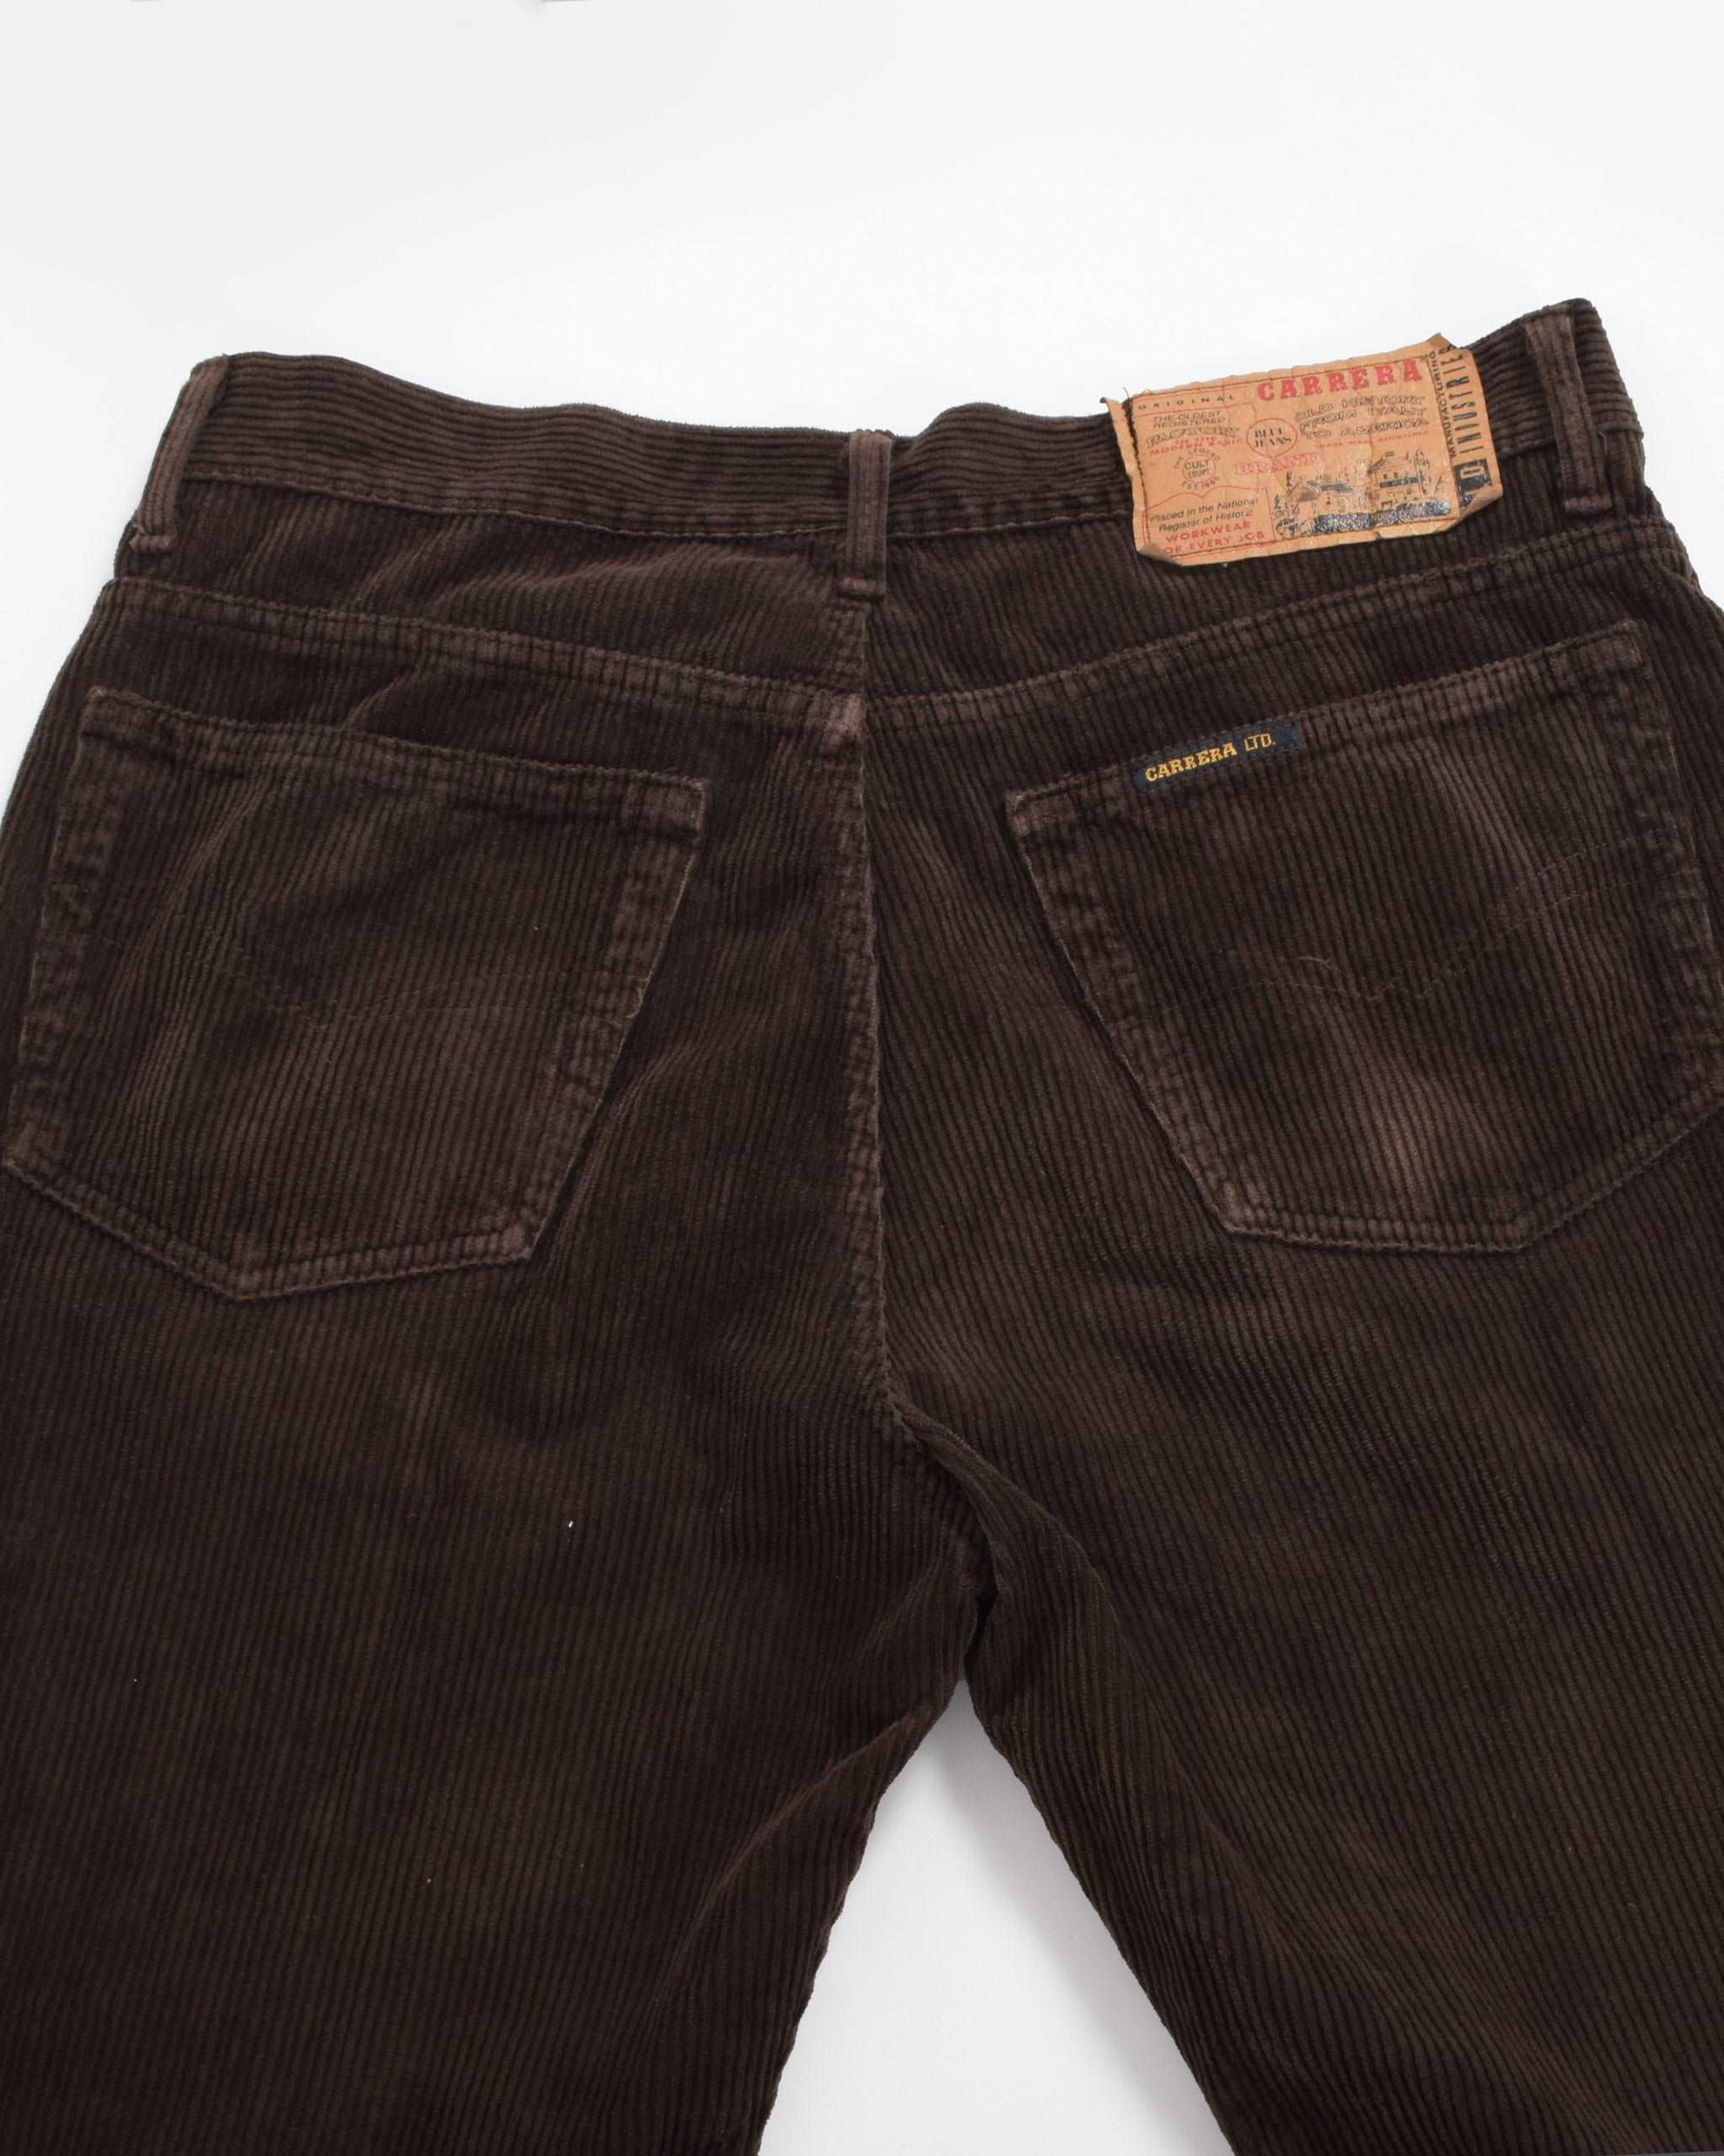 Vintage Carrera Corduroy Jeans